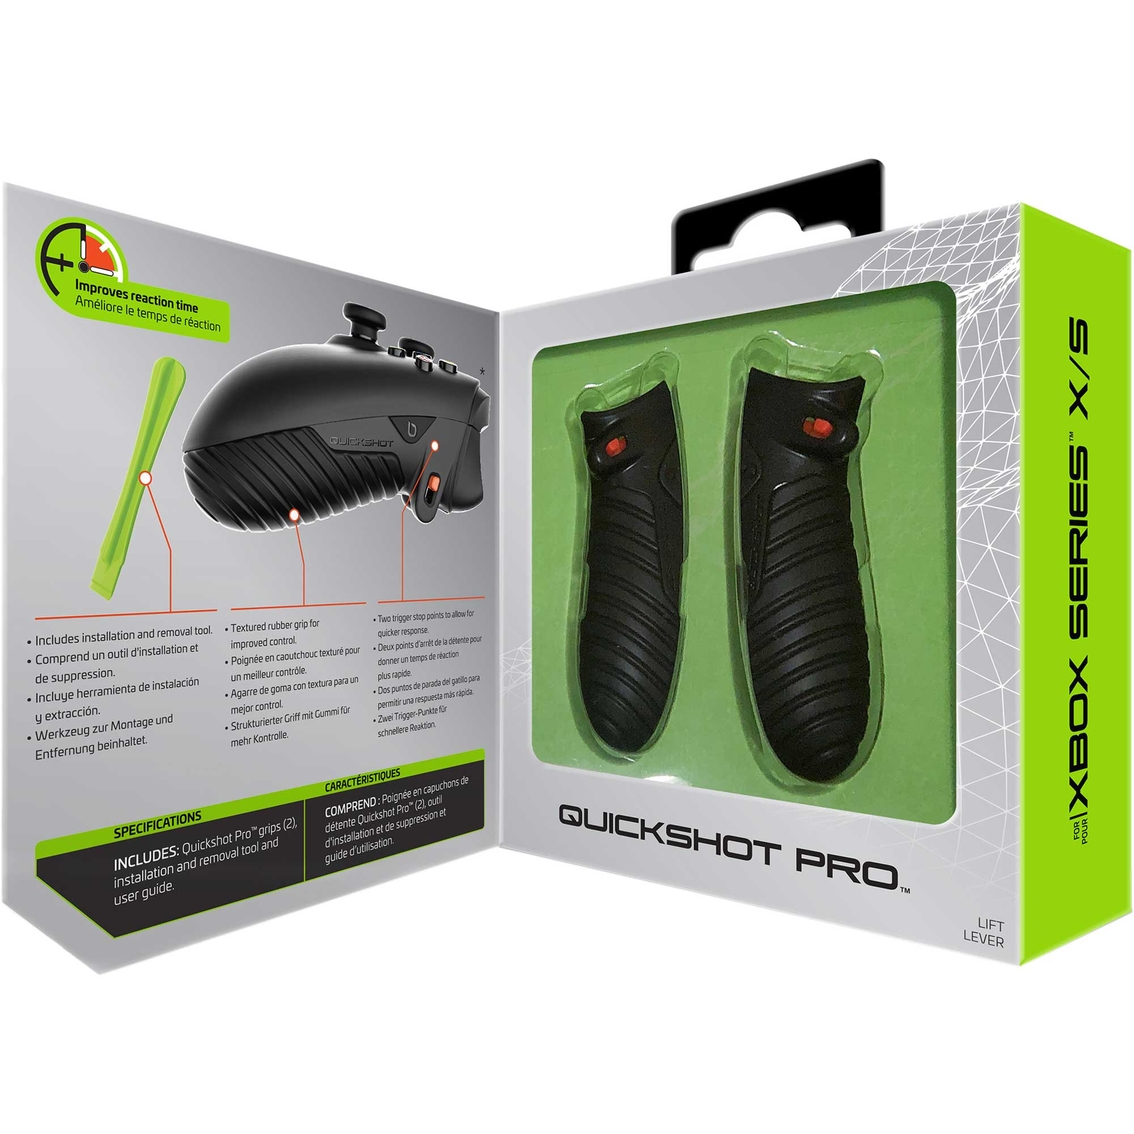 bionik Quickshot Pro for Xbox Series S/X - Image 5 of 7